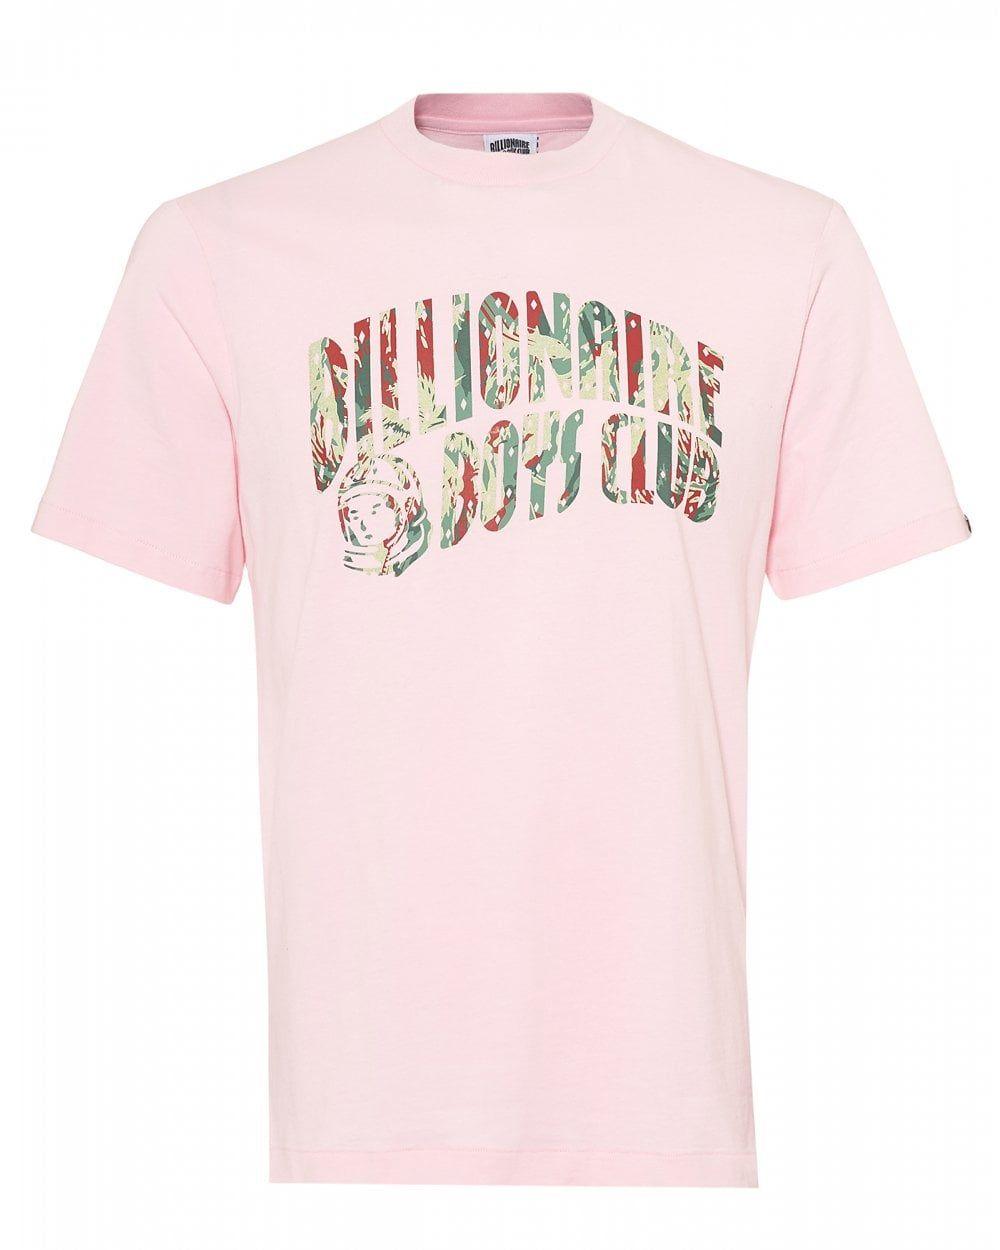 Pink T Logo - Billionaire Boys Club Mens Reflective Lizard Camo Logo T Shirt, Pink Tee